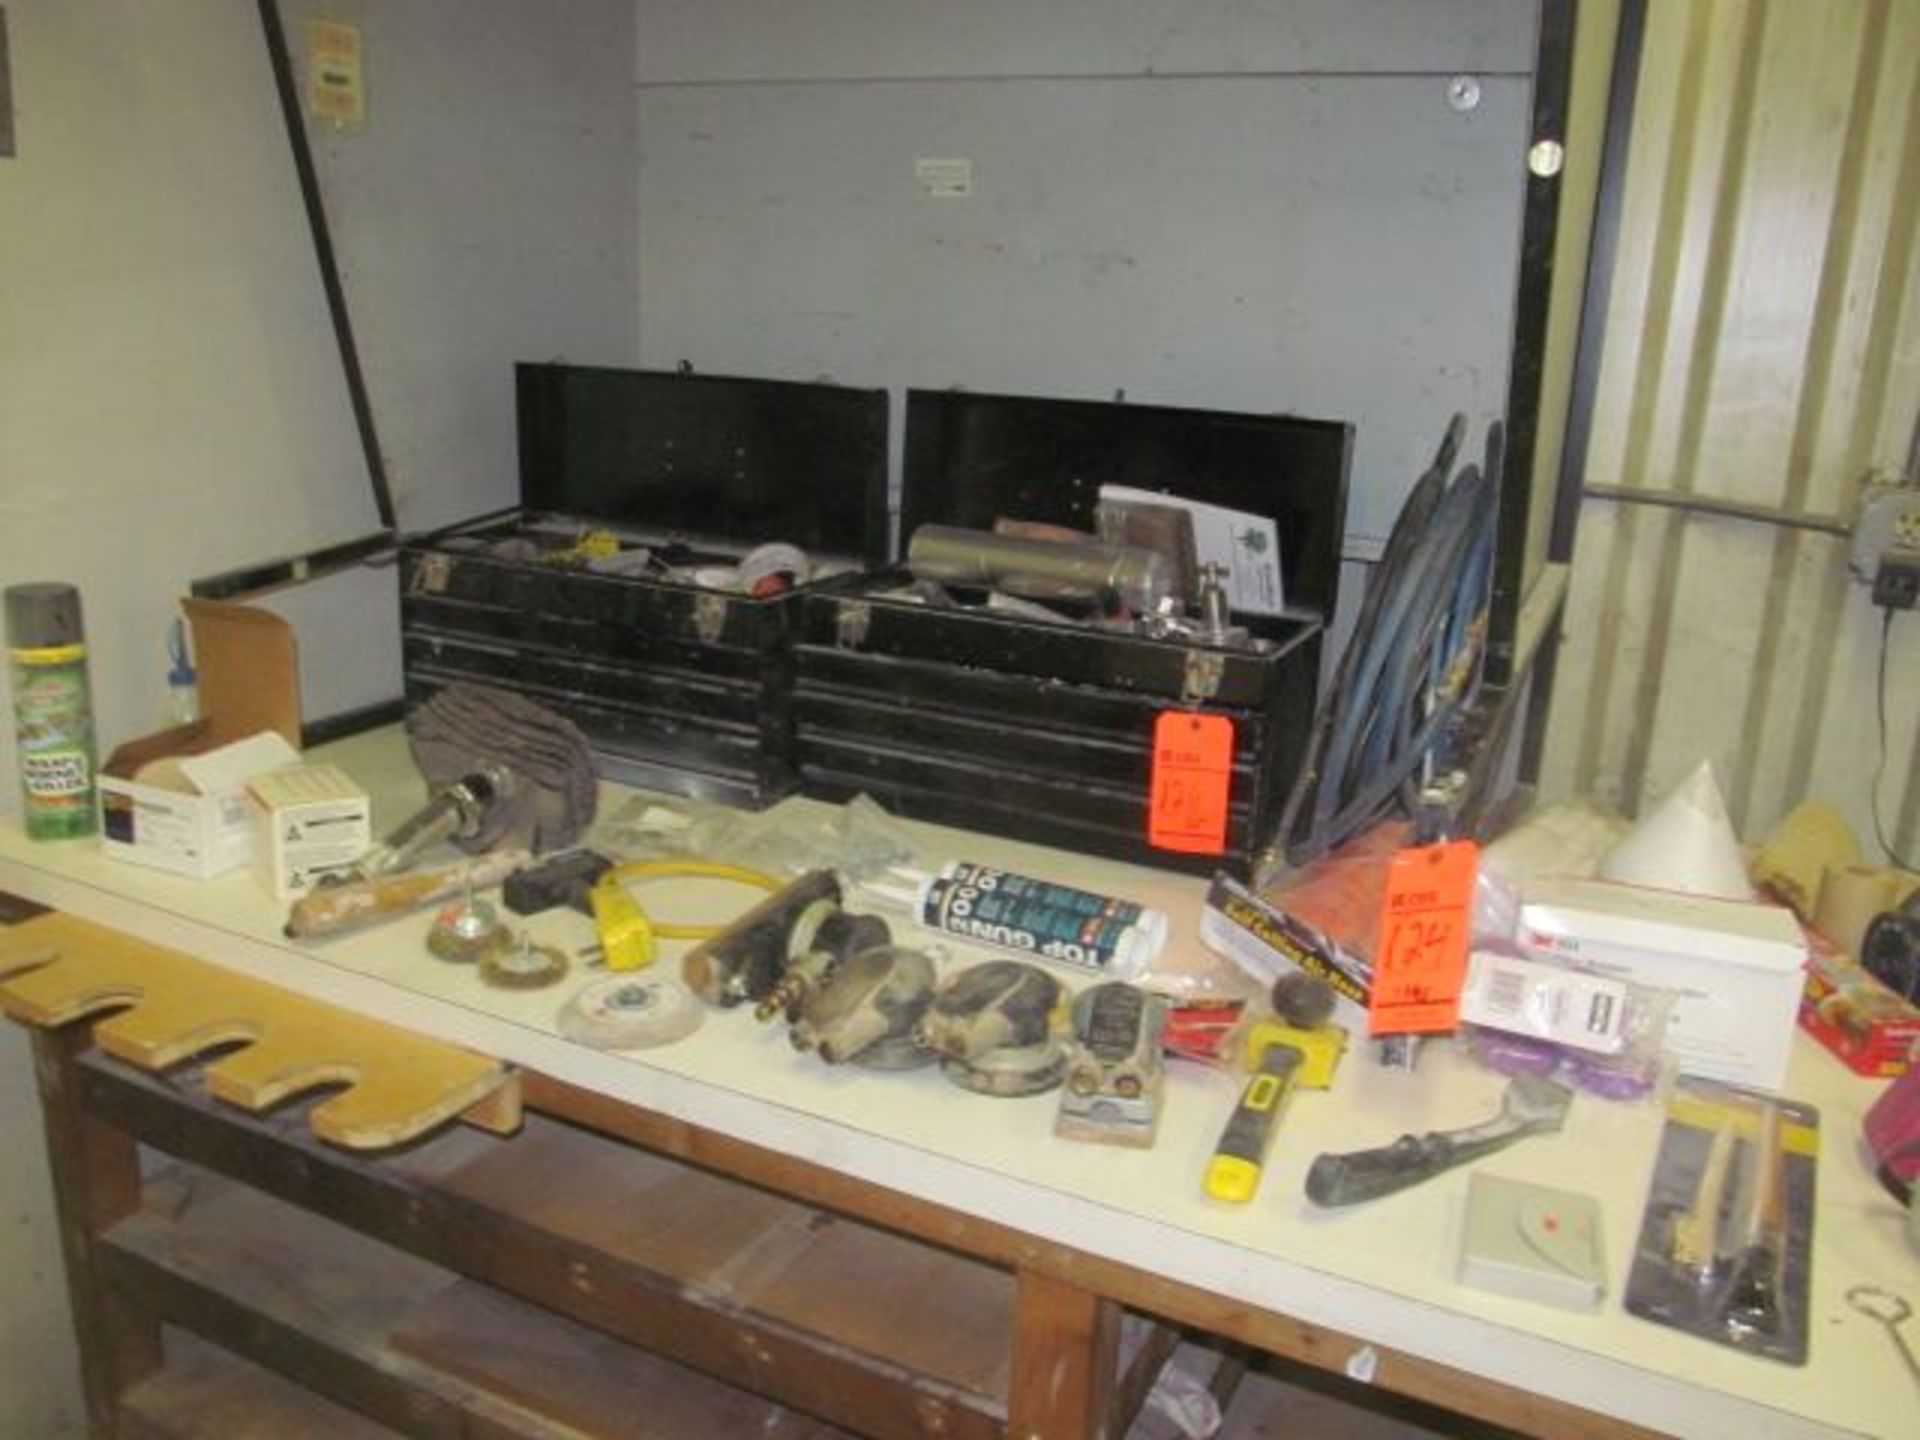 Lot ass't pneumatic tools, (2) tool boxes, respirators, filters, sand paper, 3M dispenser, oil cans,